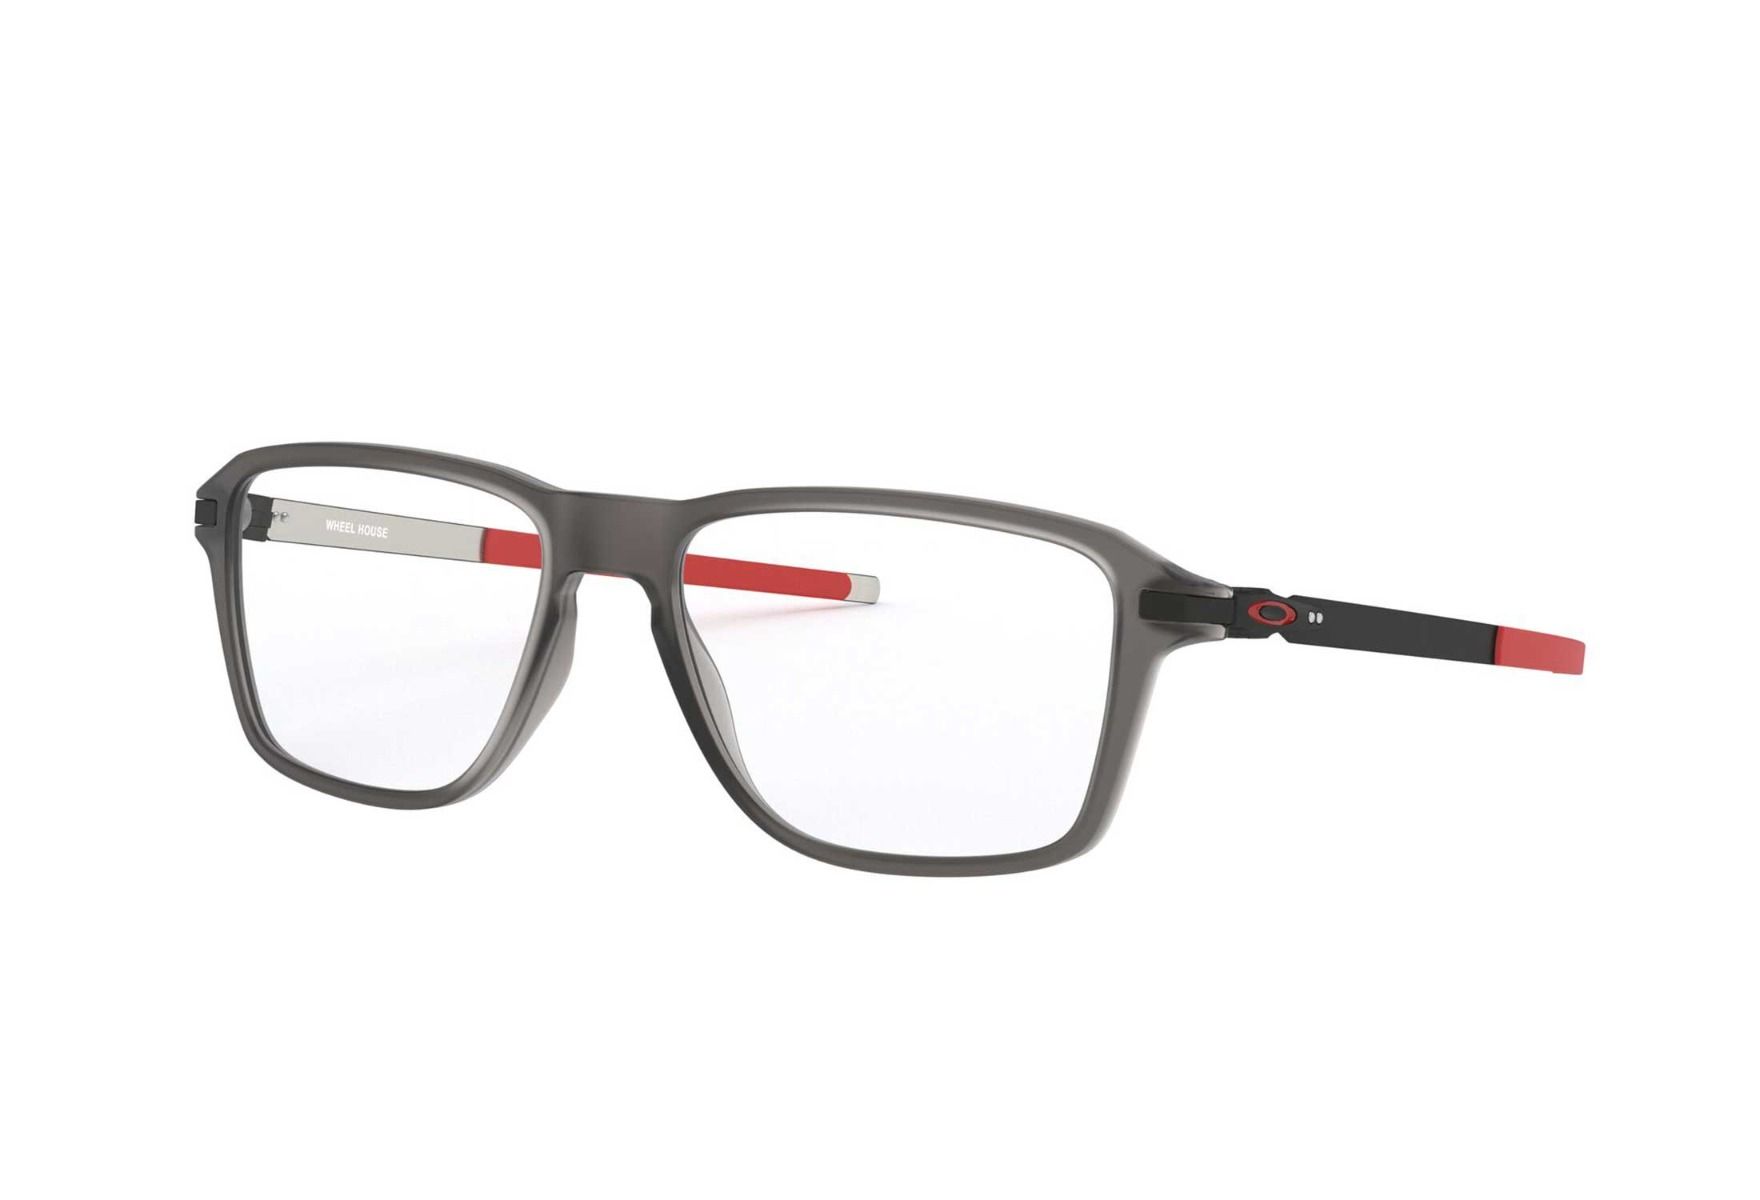 Oakley briller - Wheel House - Svart, Medium Hel ramme i Metall, Plast - Rektangulære